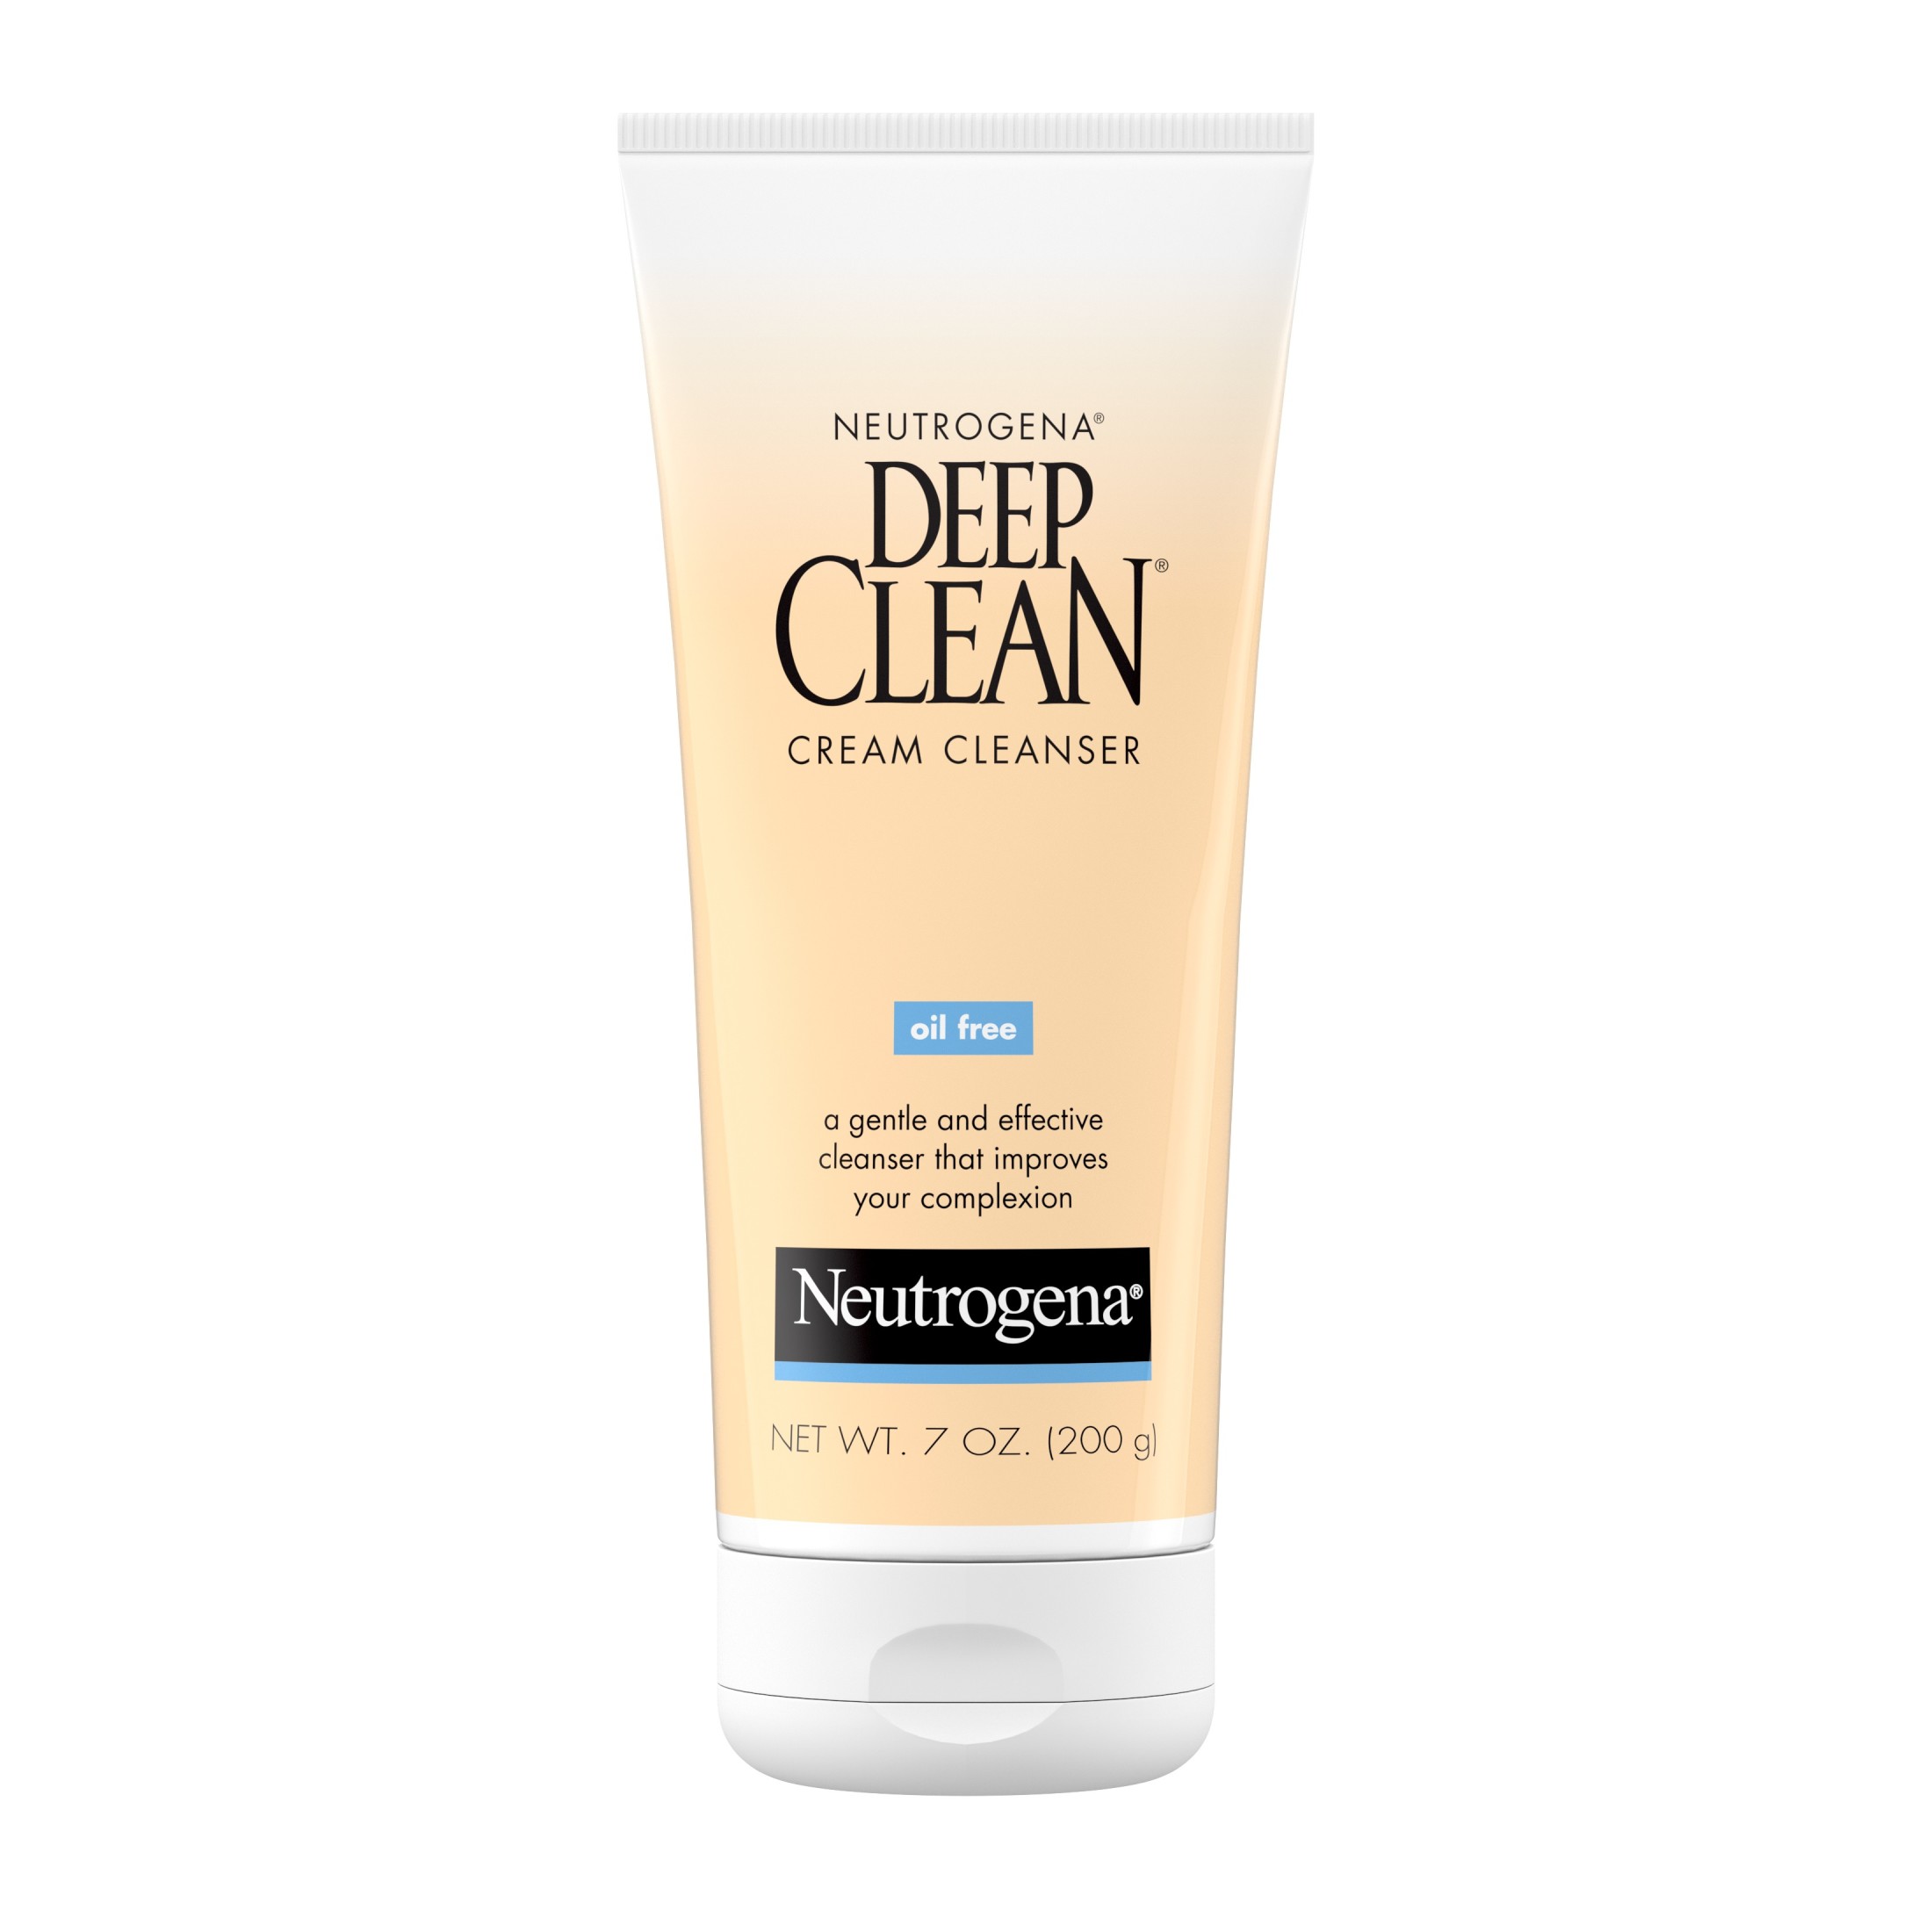 Neutrogena Deep Clean Oil-Free Daily Facial Cream Cleanser, 7 fl. oz - image 1 of 12